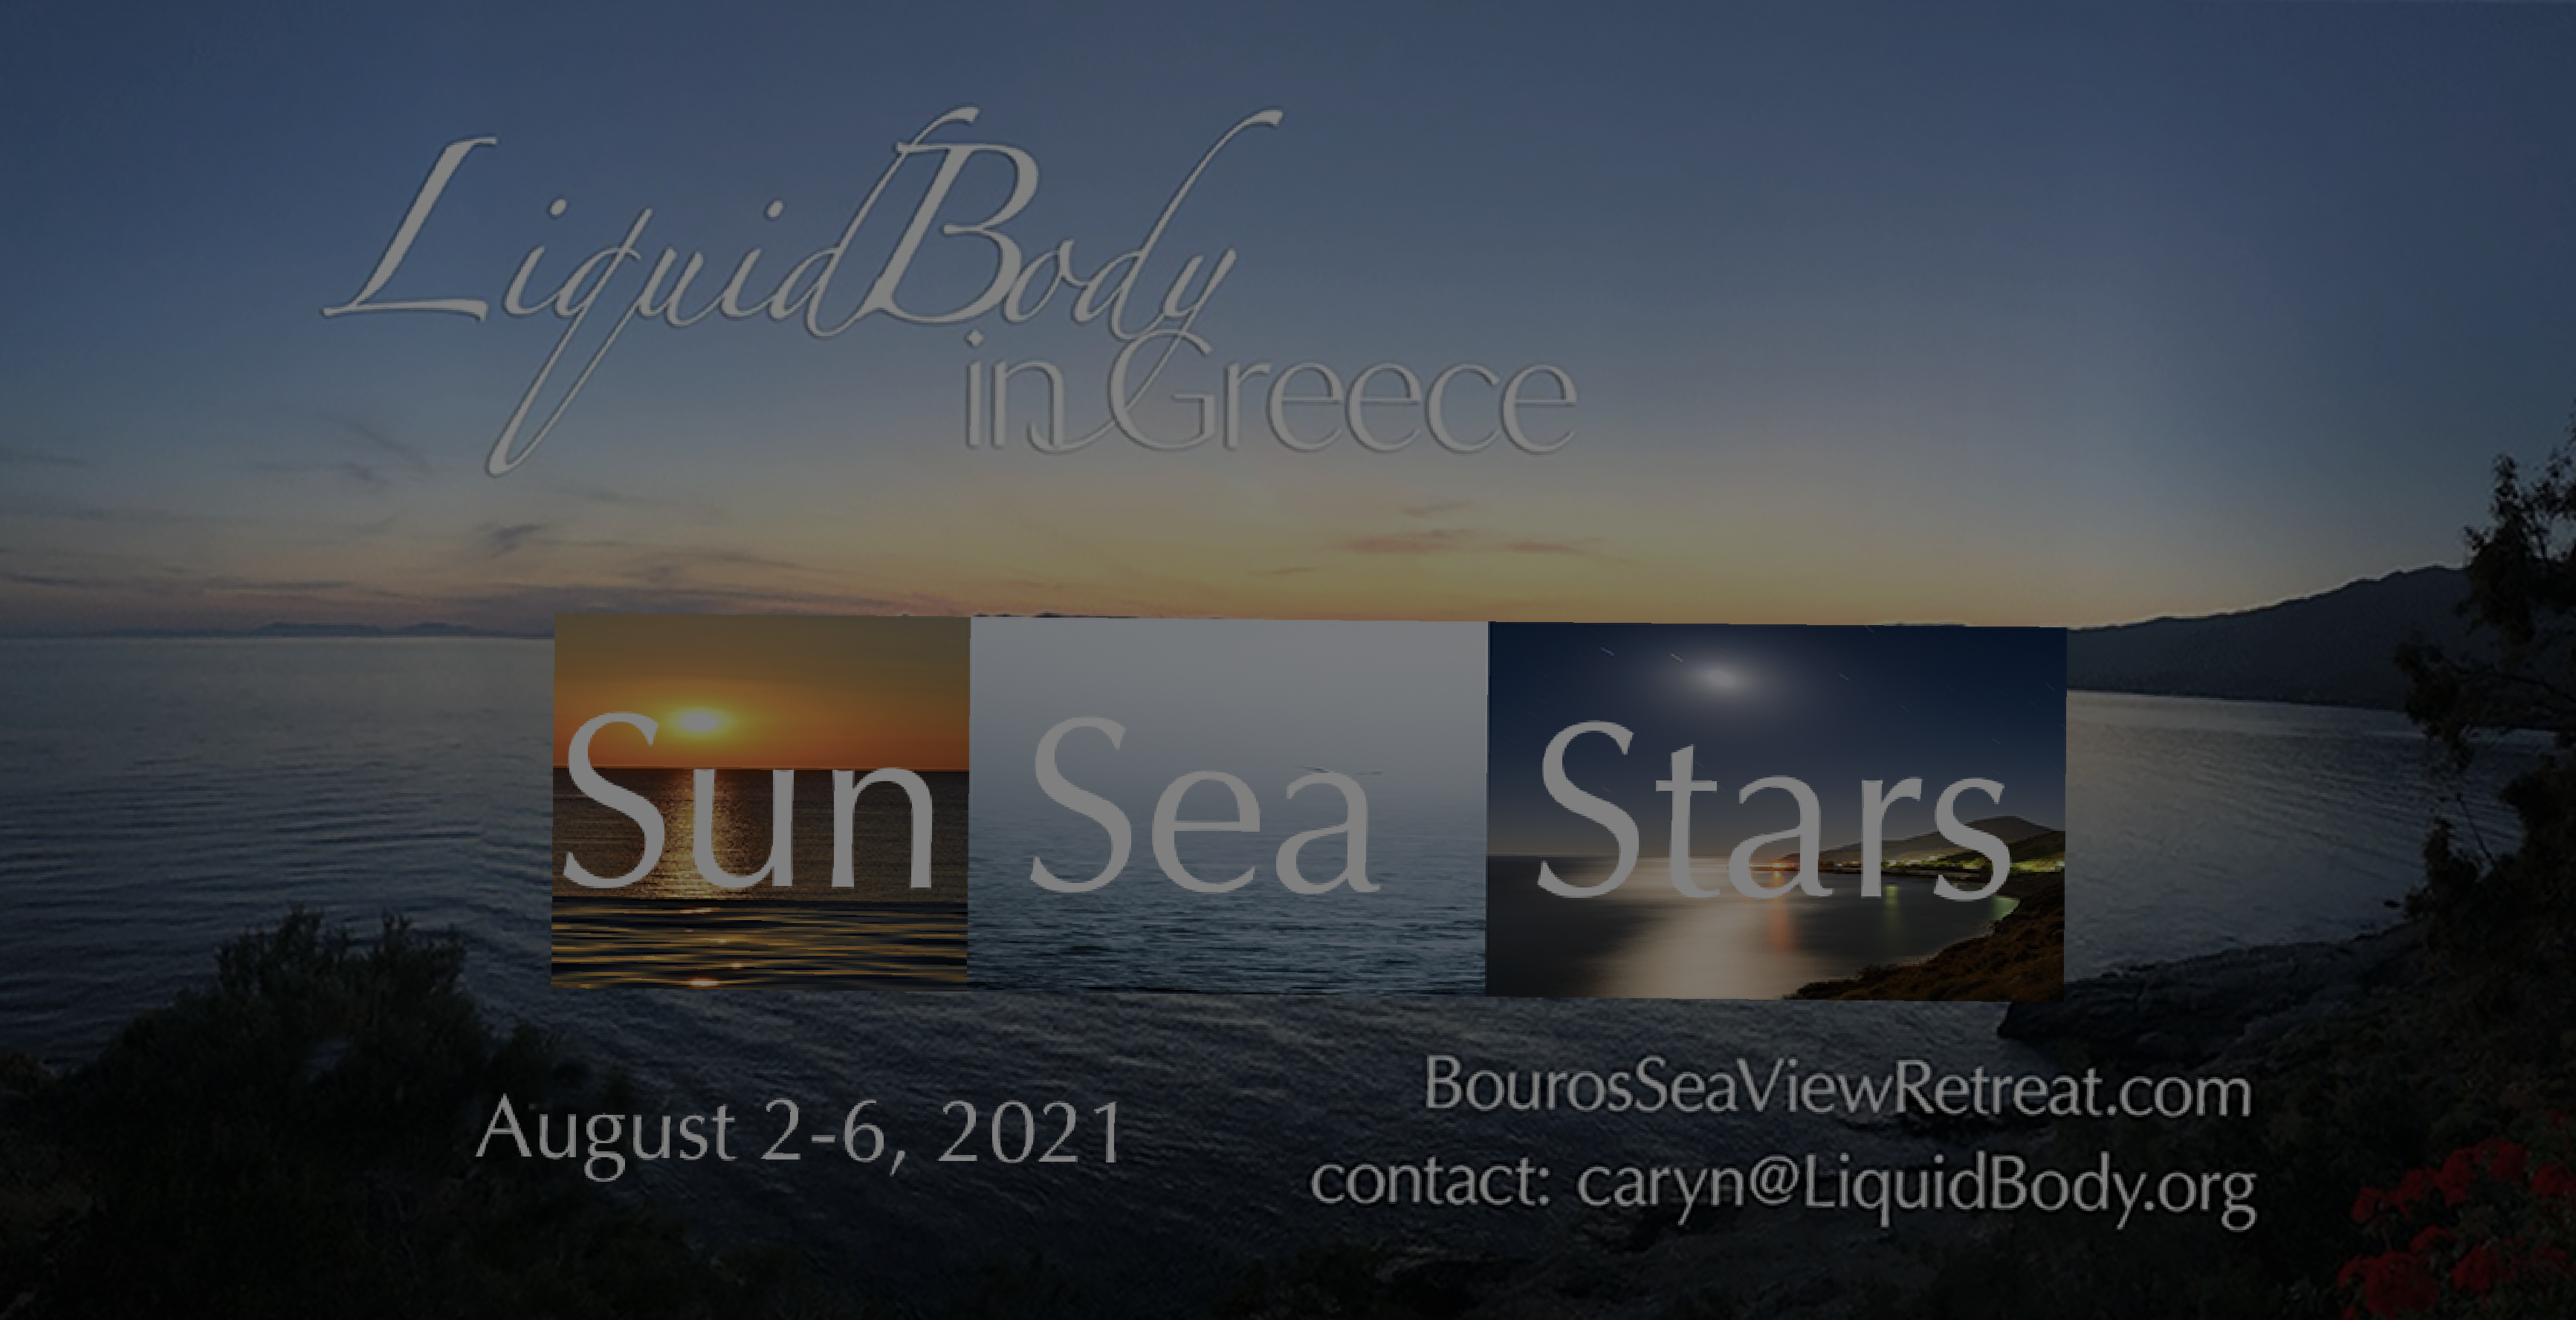 Sun Sea Stars Image over a Greek Sea Vista